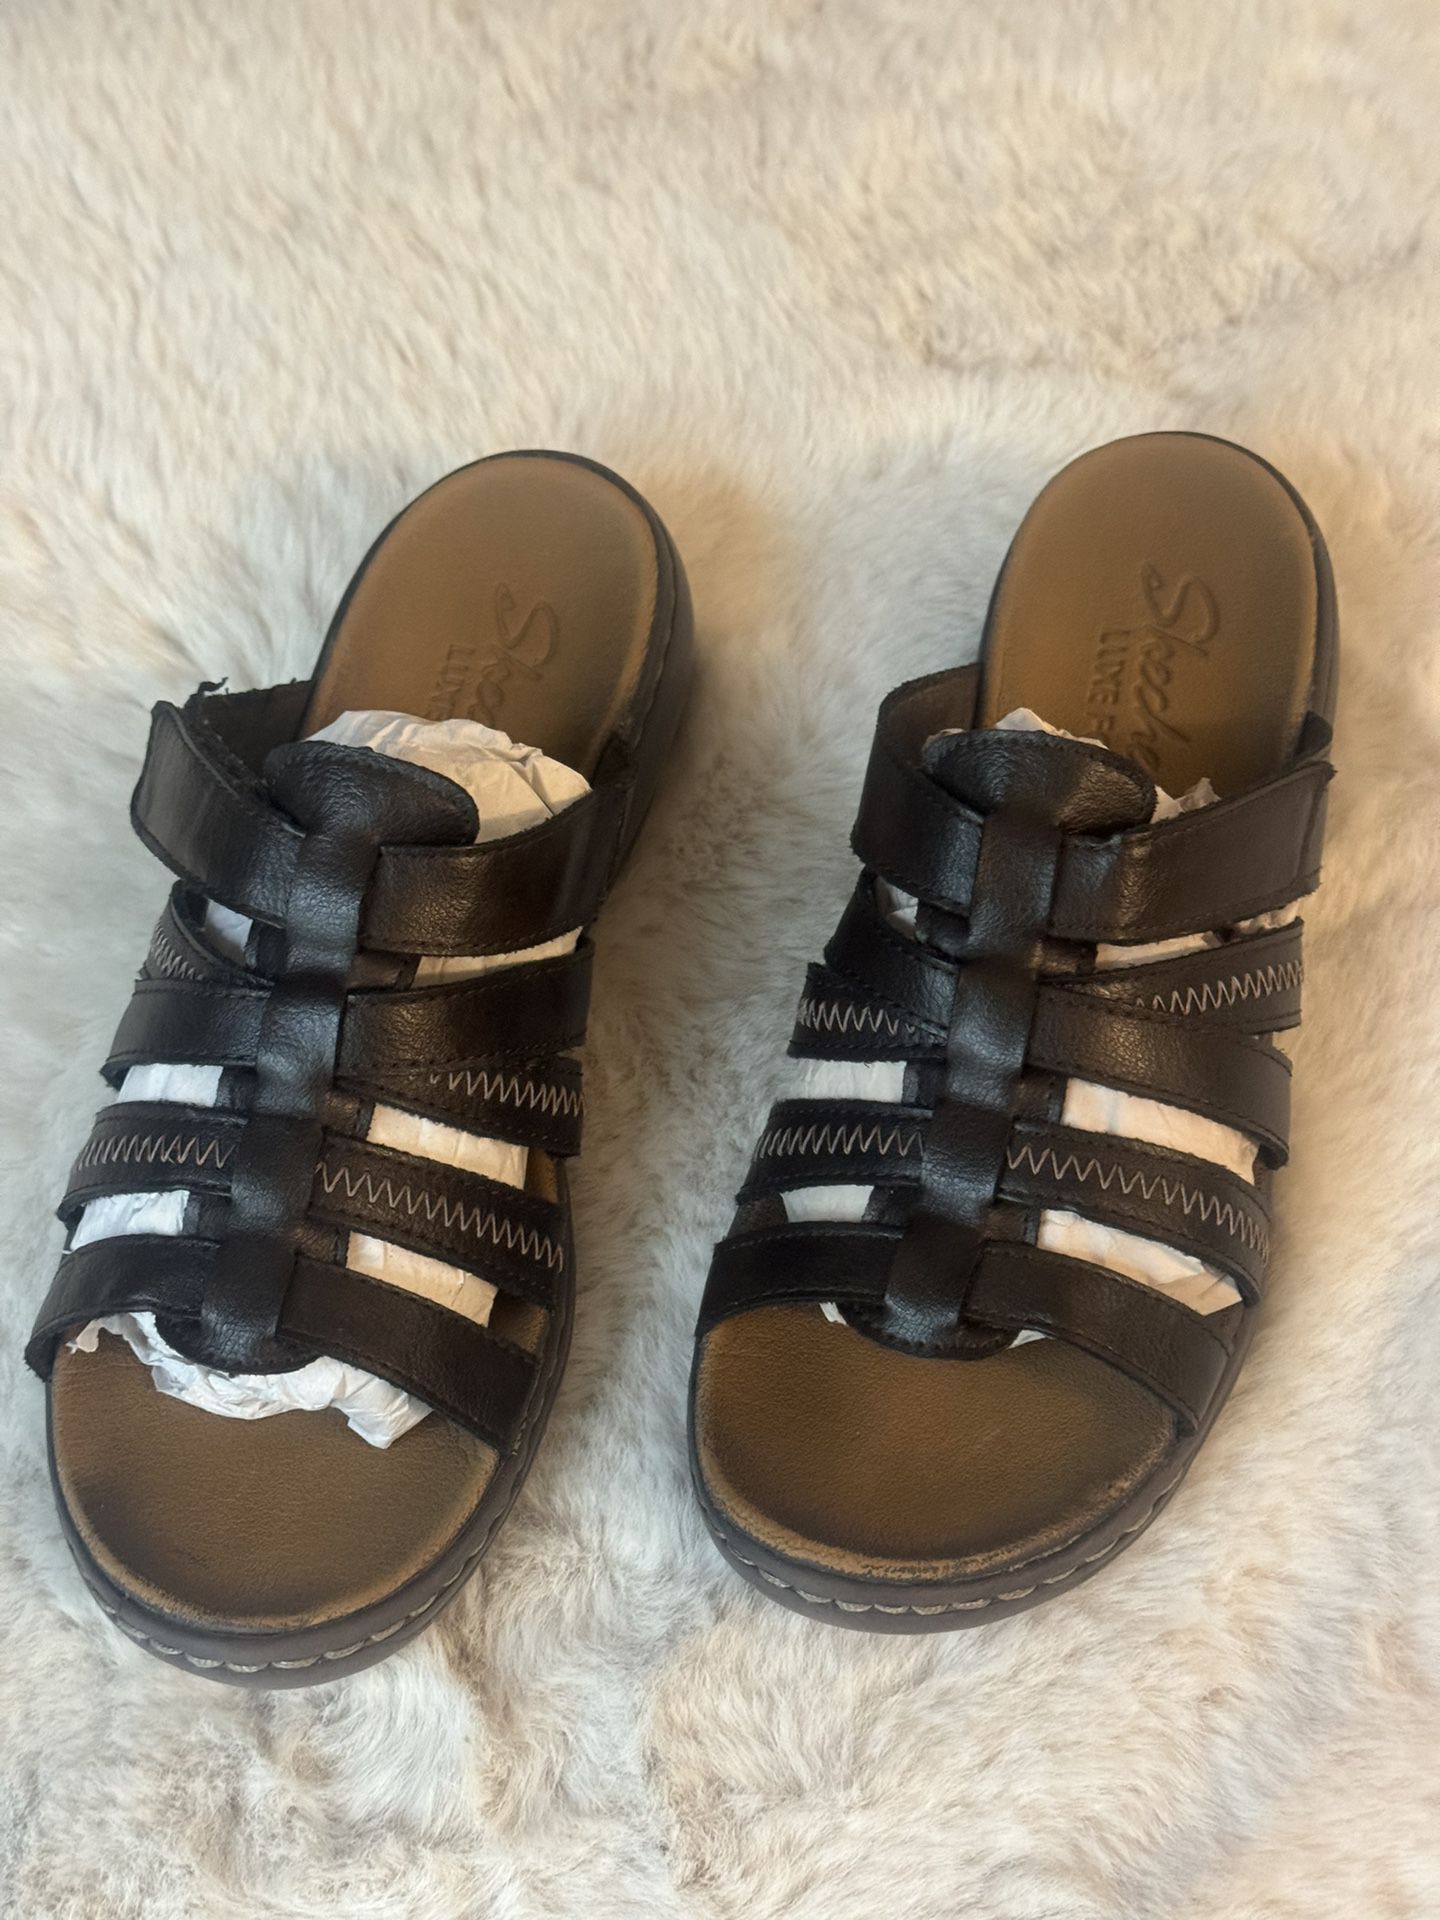 Skechers Women’s Leather Sandals Size 7